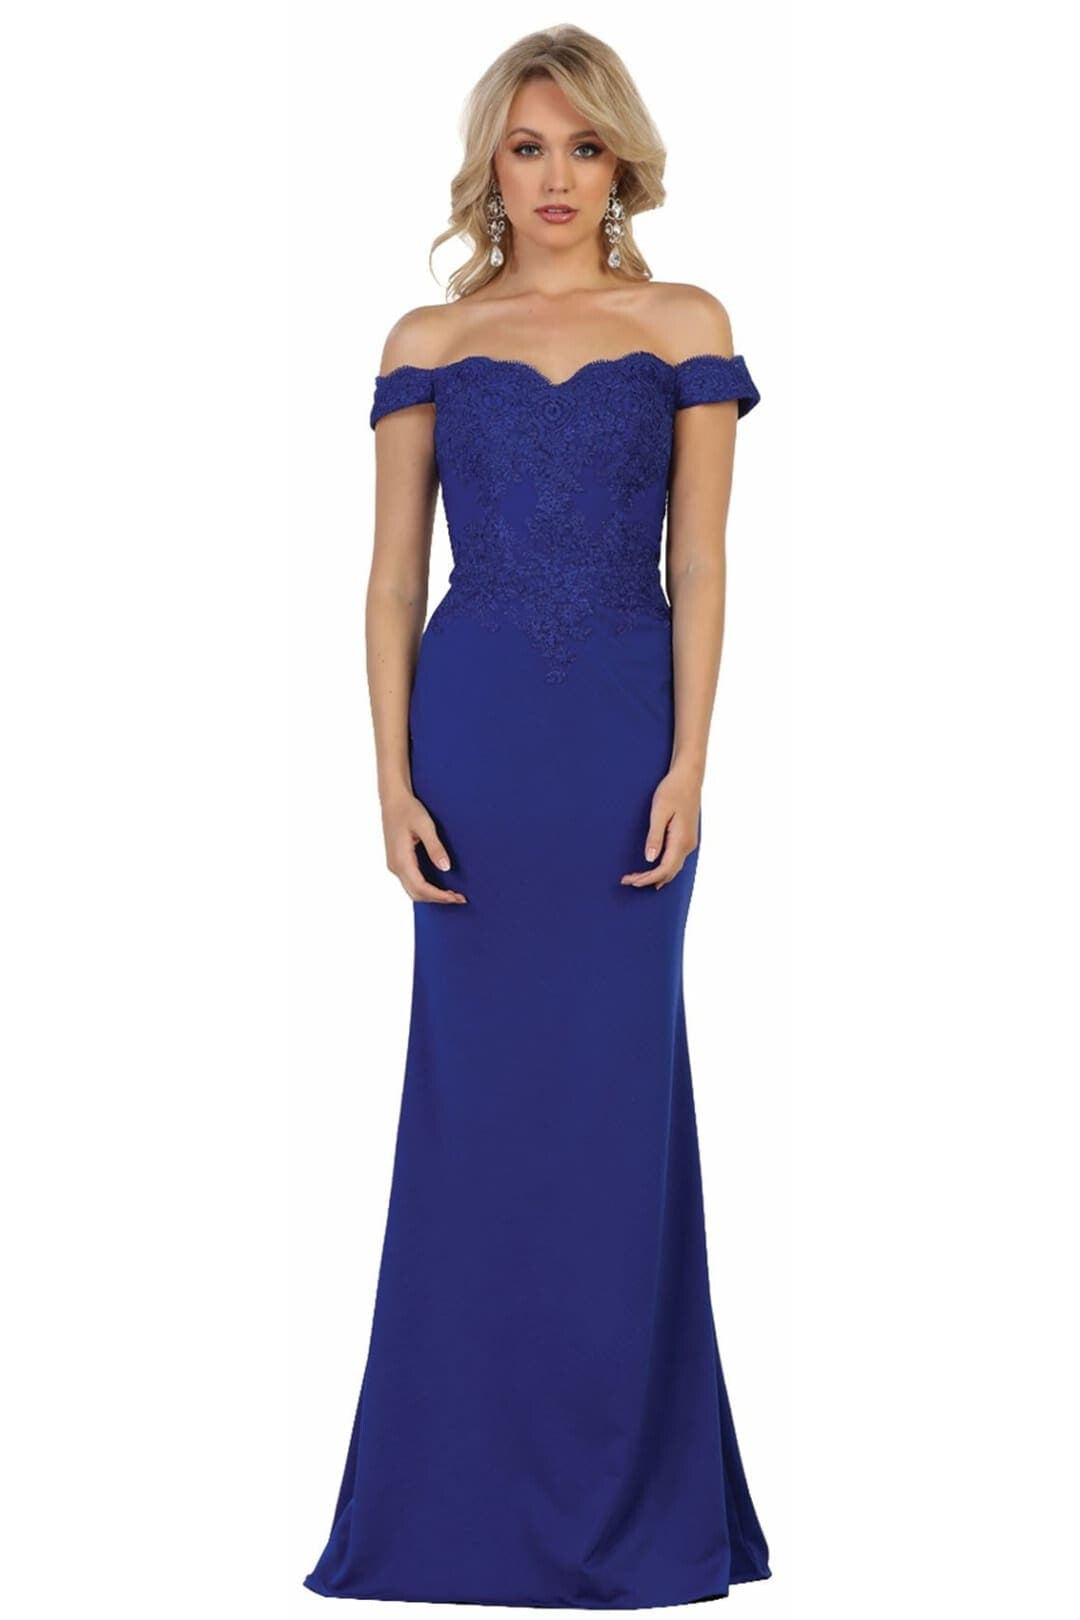 Elegant Form Fitting Evening Dress - Royal Blue / 4